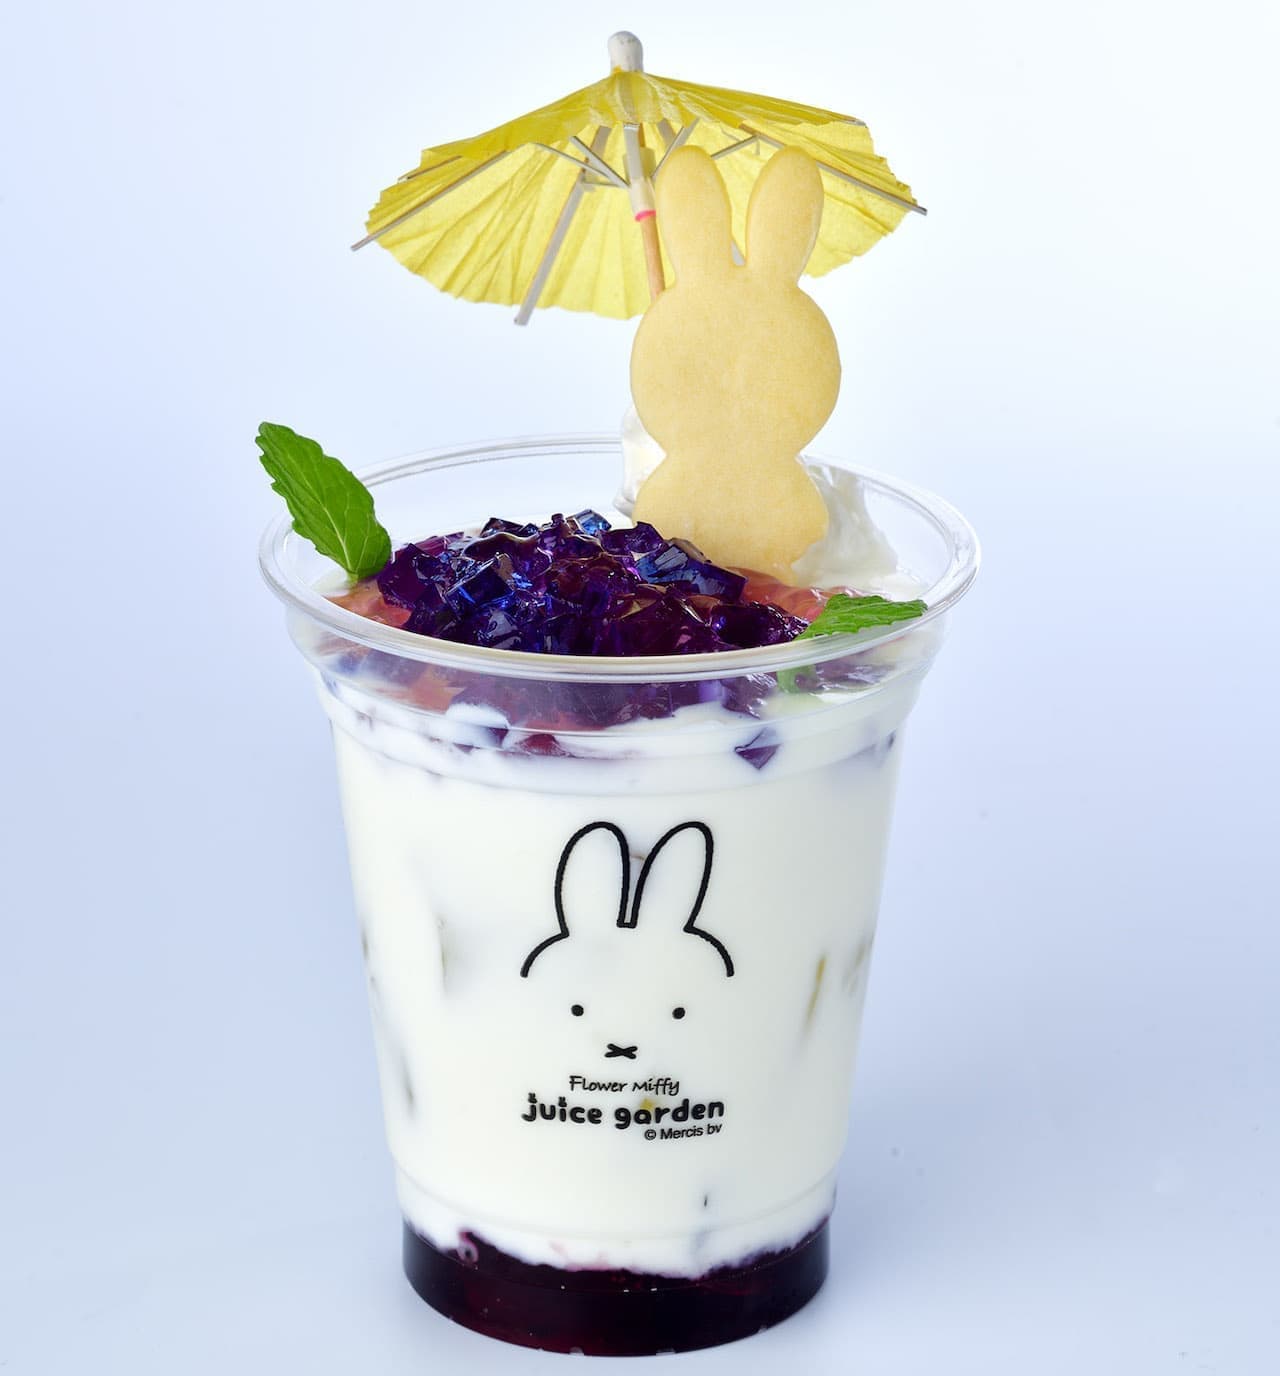 Flower Miffy Hydrangea Yogurt Drink" from Flower Miffy Juice Garden